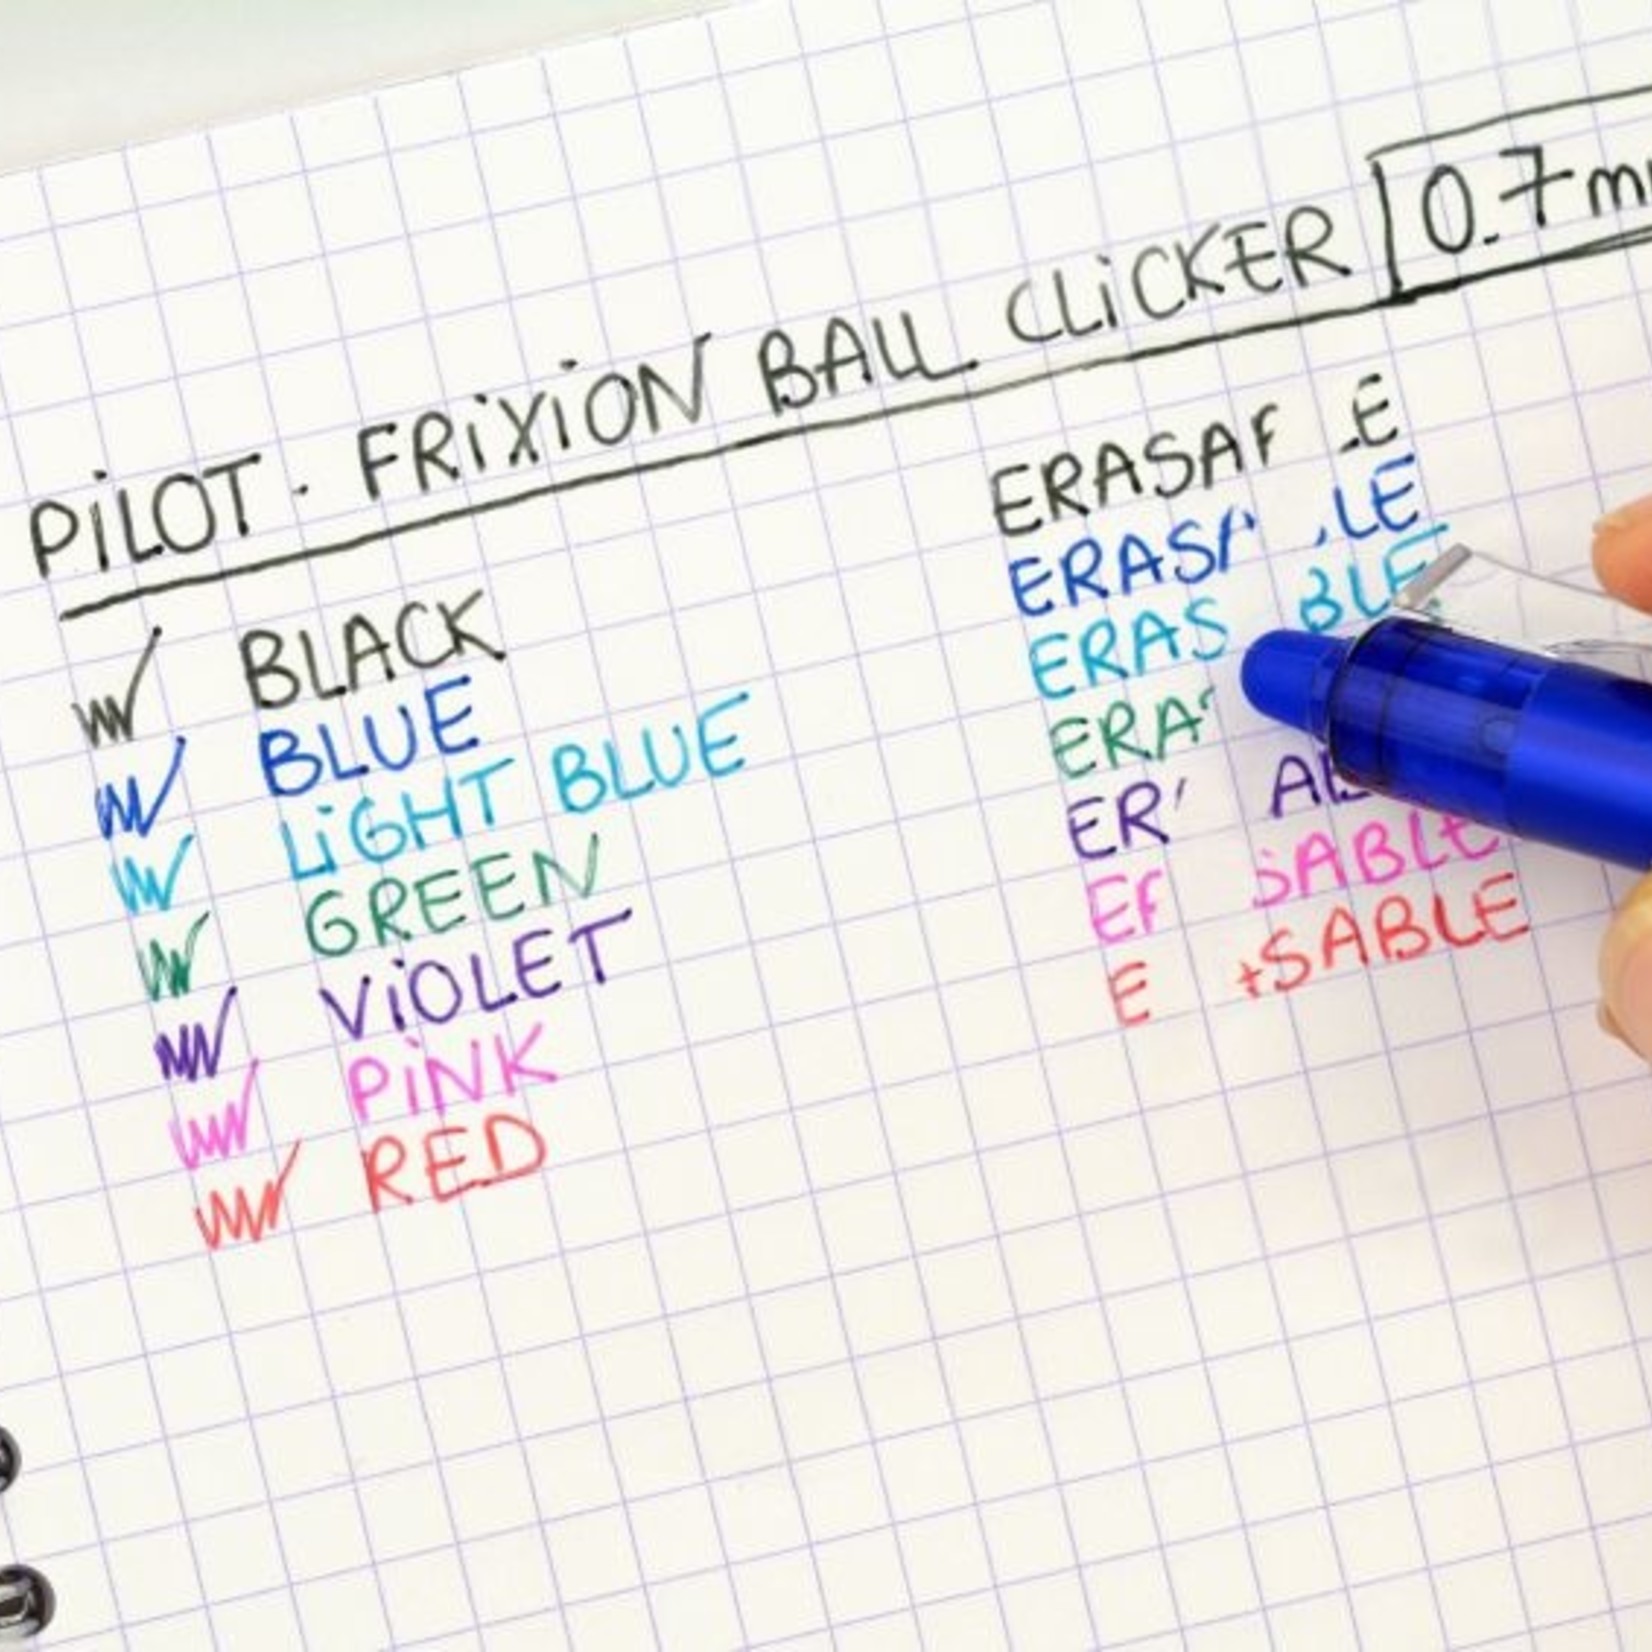 PILOT FRIXION BALL CLICKER ERASABLE INK PEN FINE 0.7MM BLUE